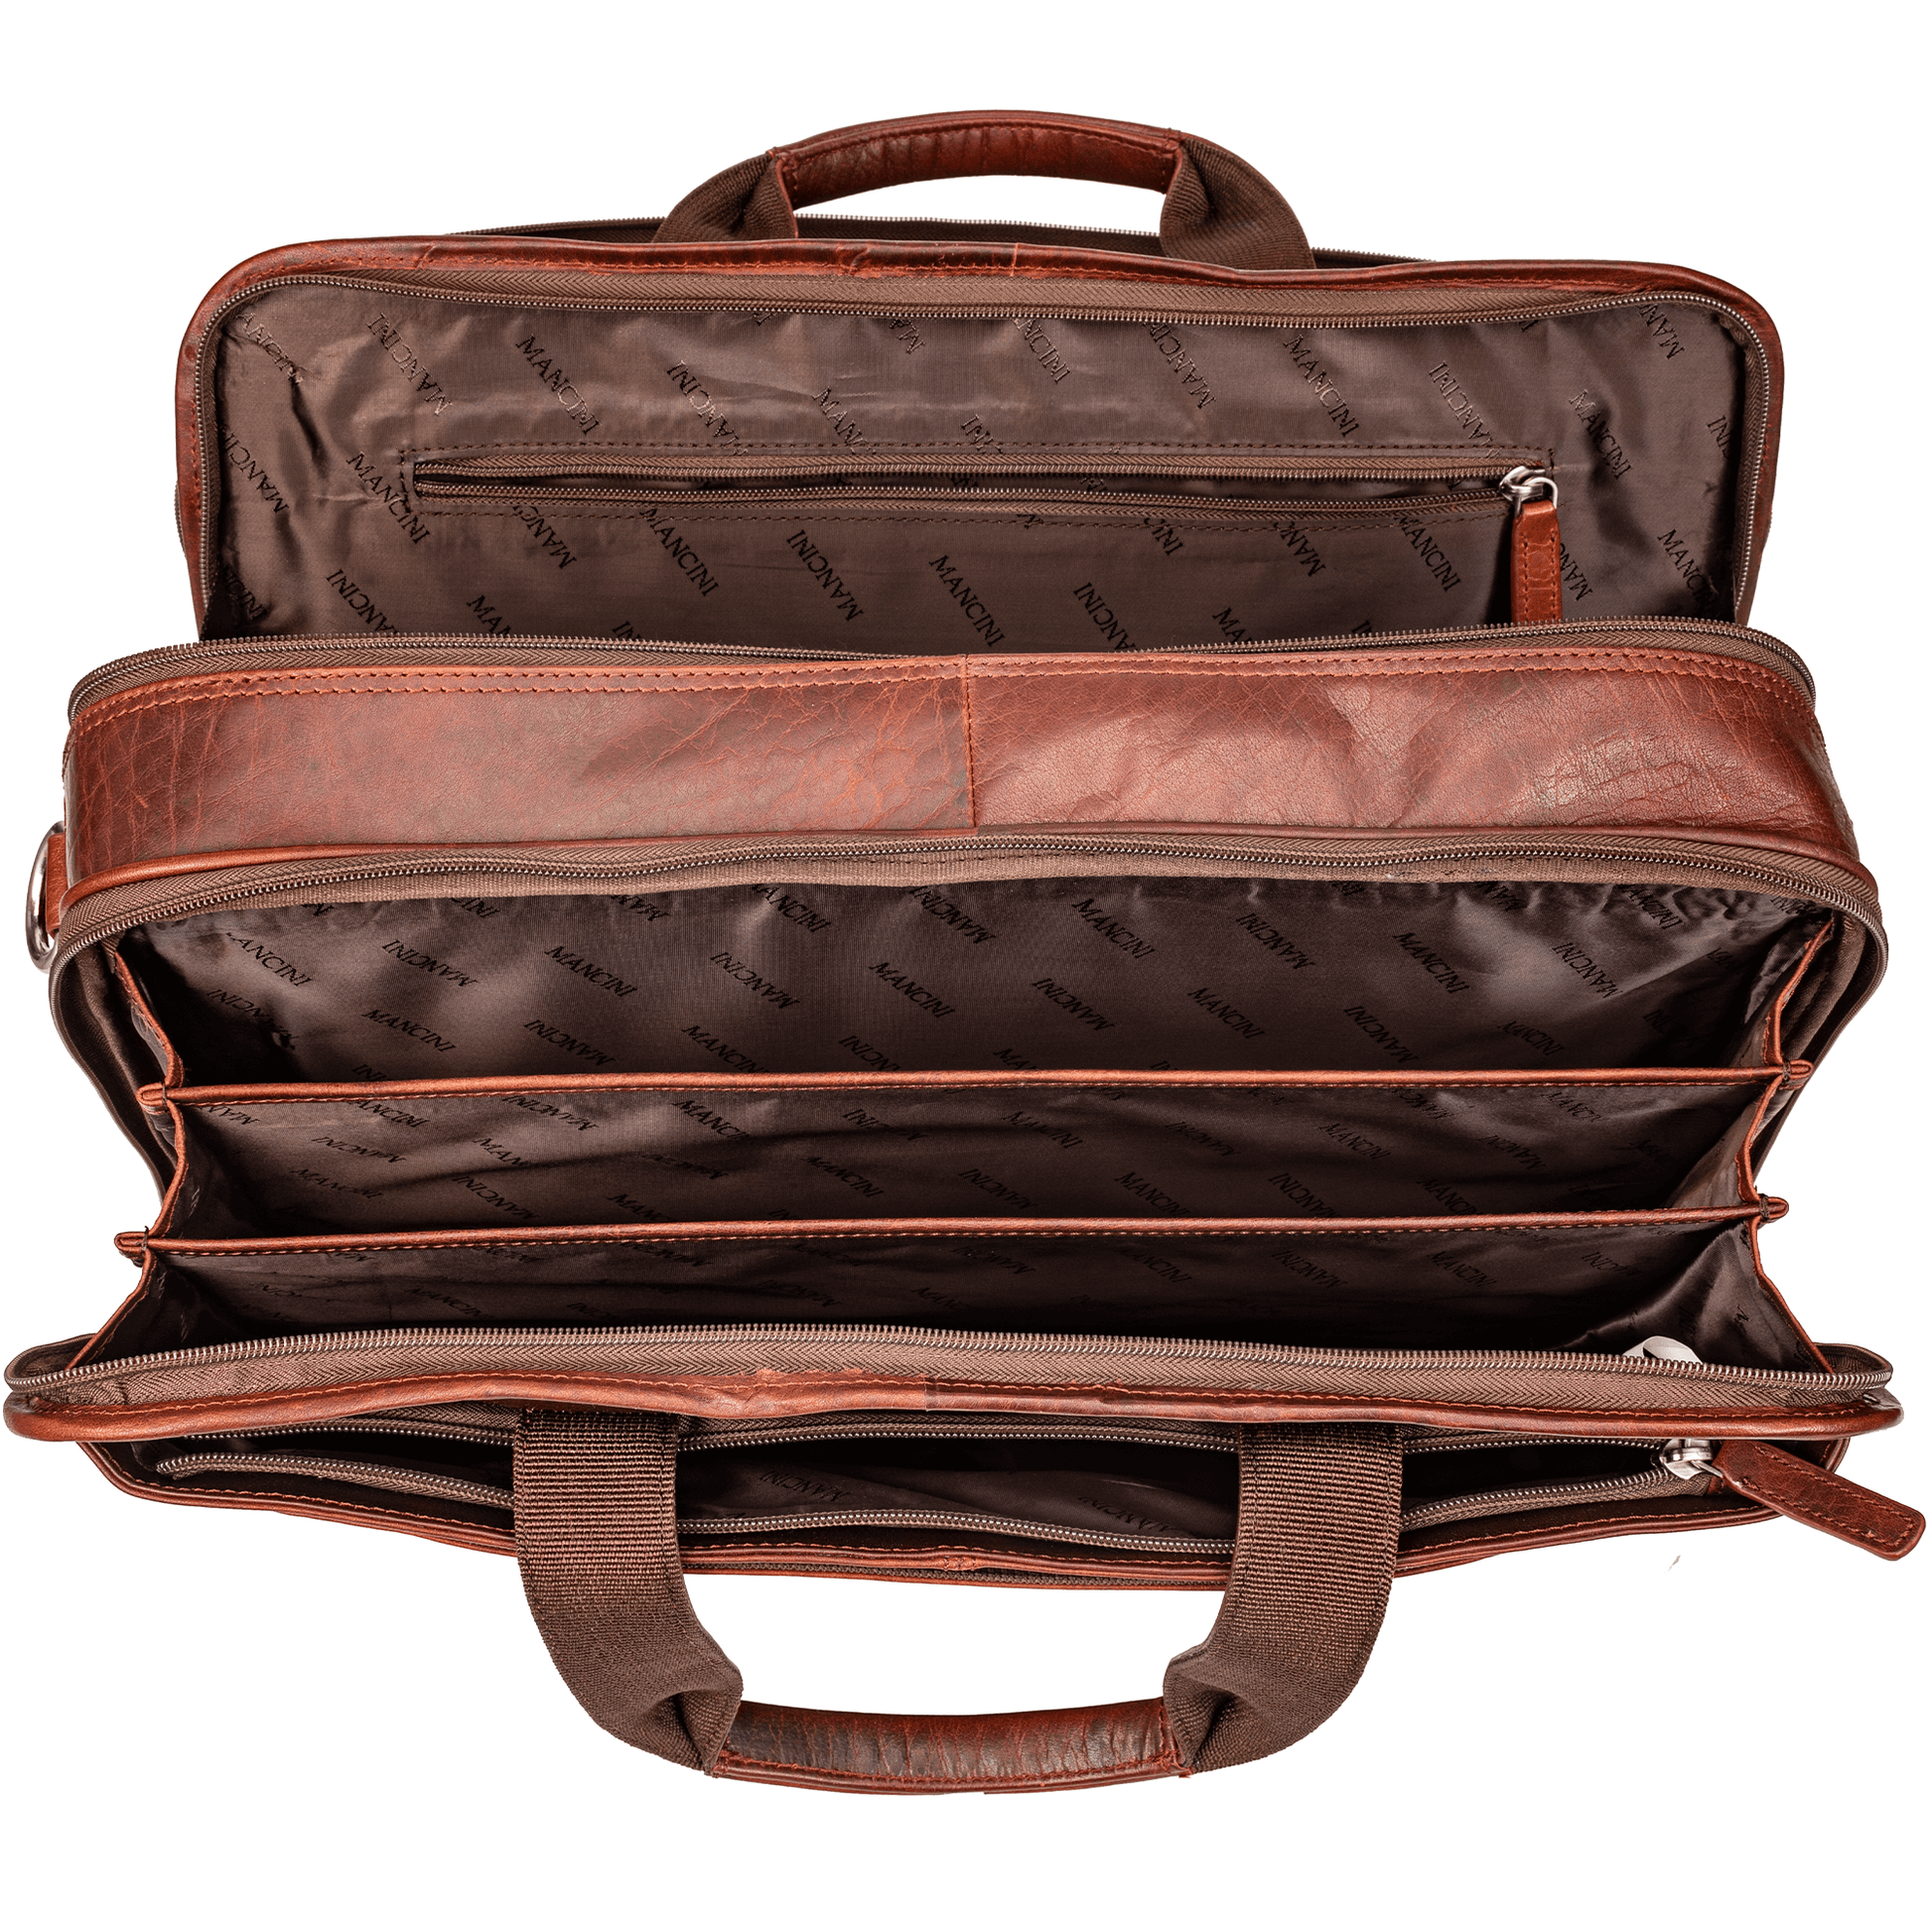 Mancini BUFFALO Double Compartment Top Zipper 15.6” Laptop / Tablet Briefcase